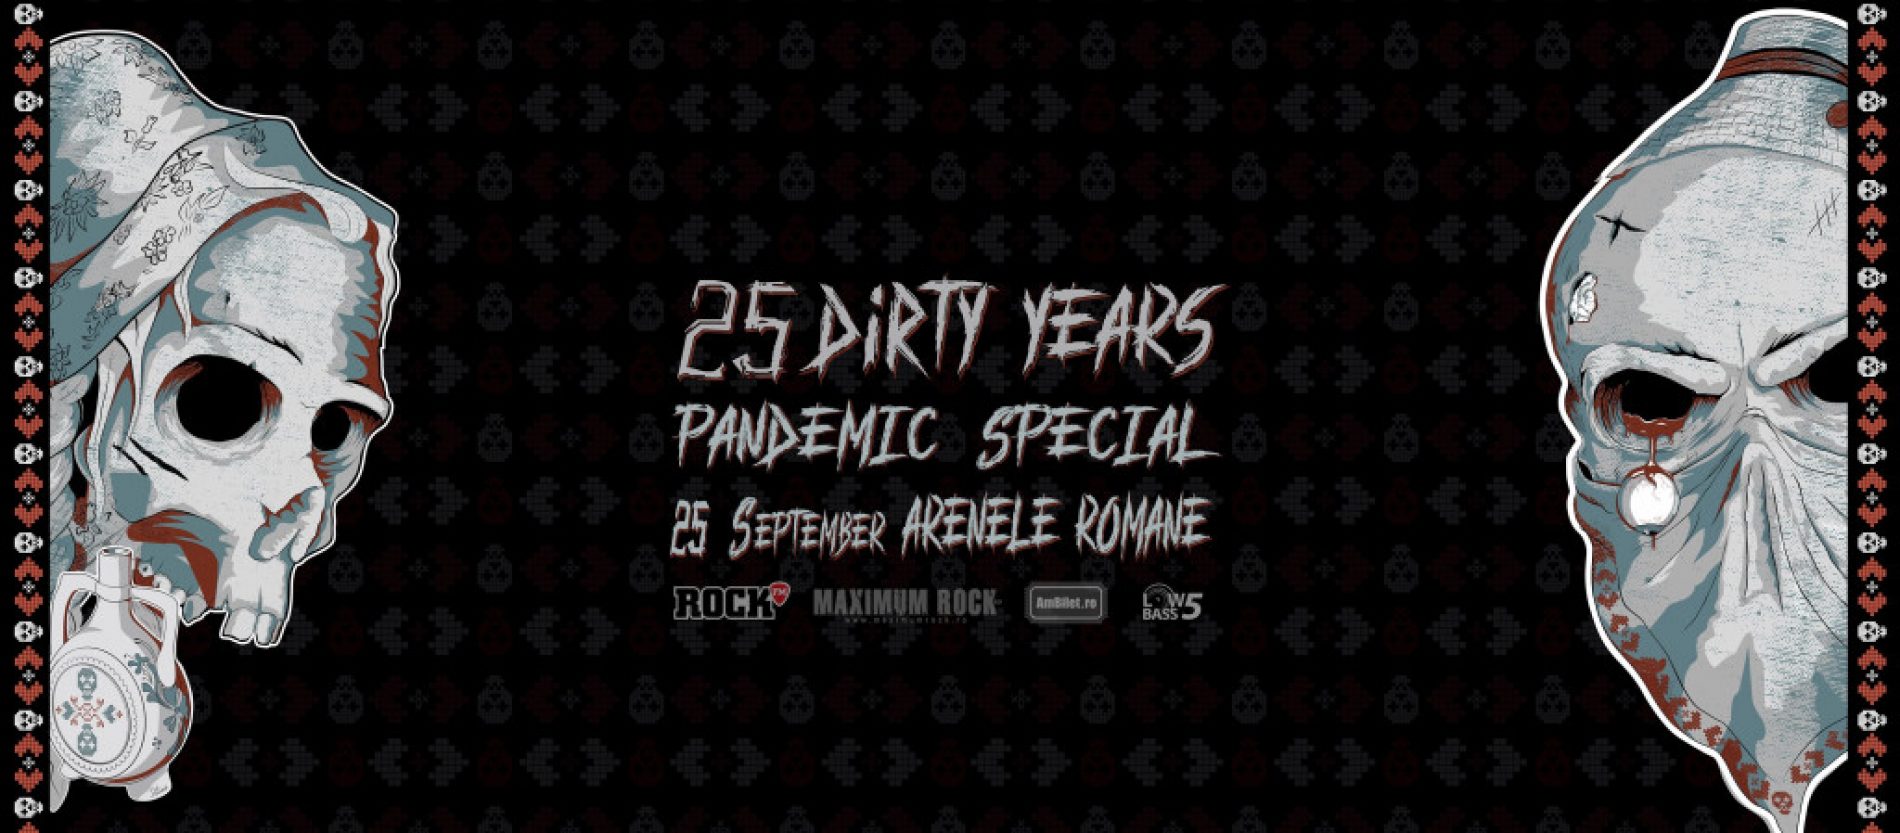 Program și reguli de acces pentru concertul Dirty Shirt: 25 Dirty Years – Pandemic Special